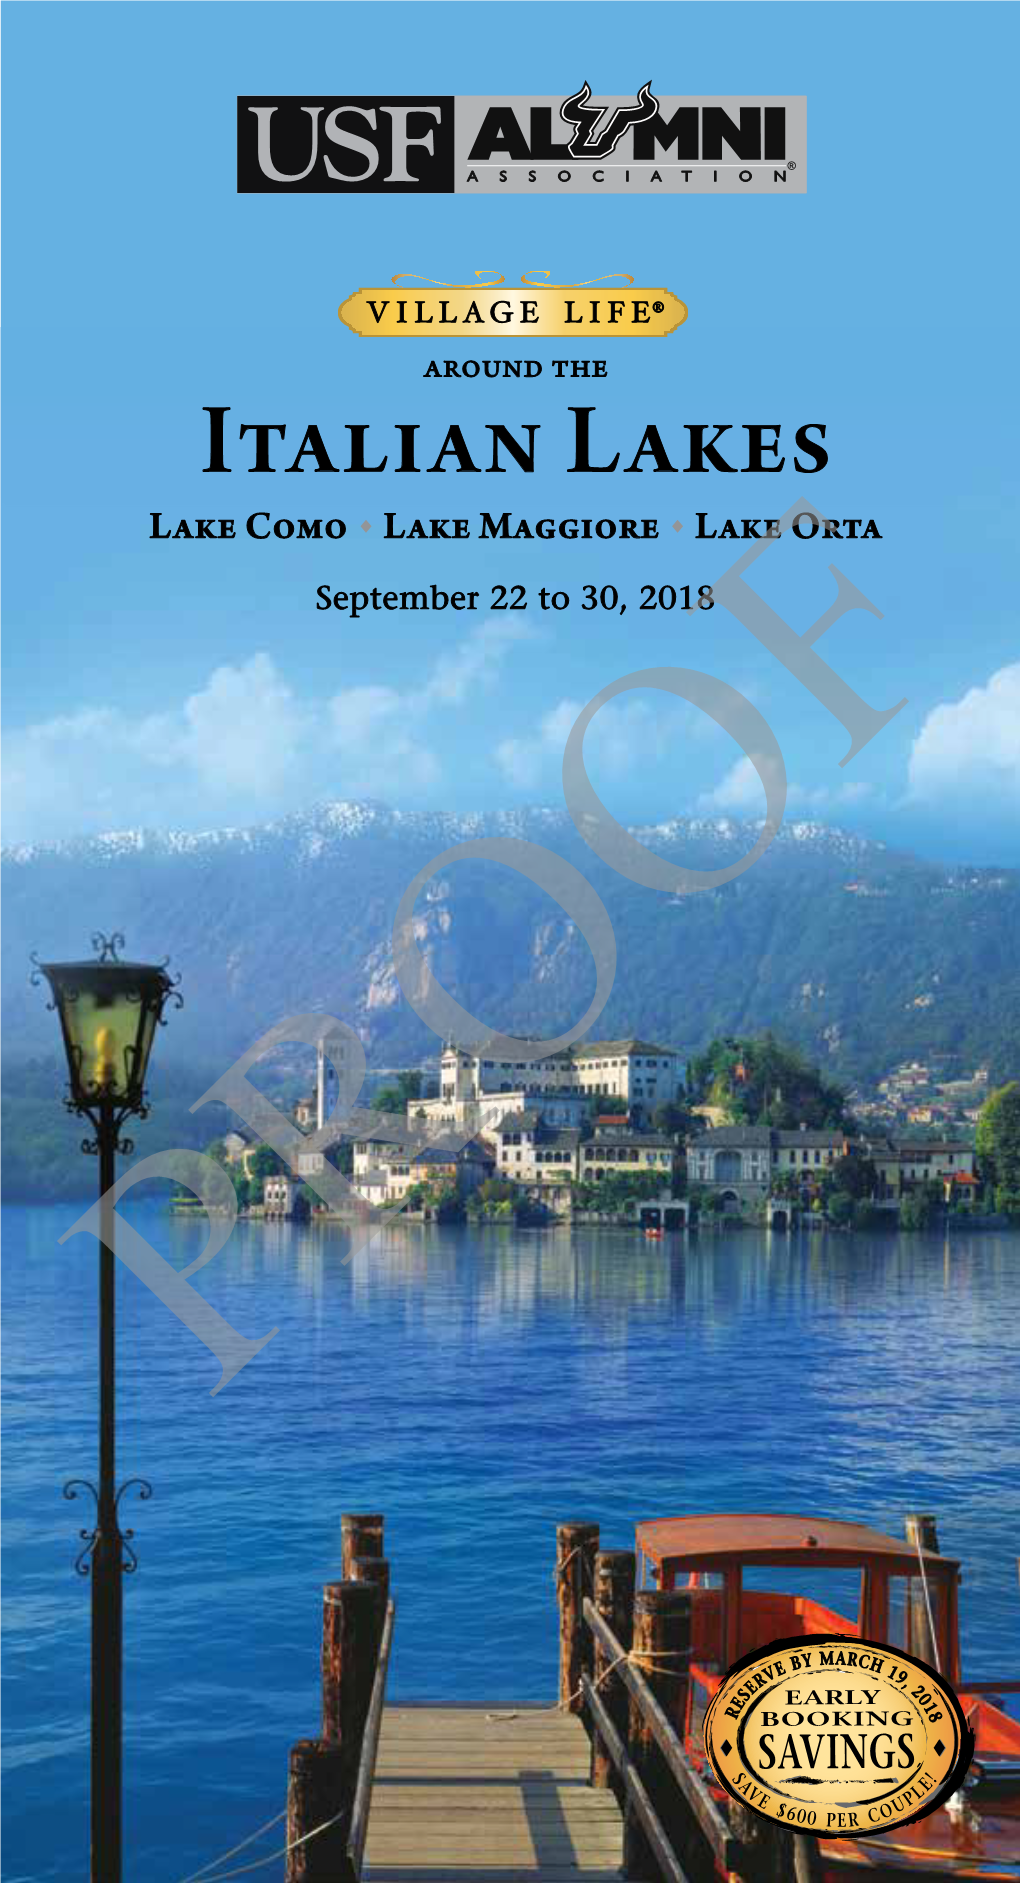 Italian Lakes Lake Como U Lake Maggiore U Lake Orta September 22 to 30, 2018